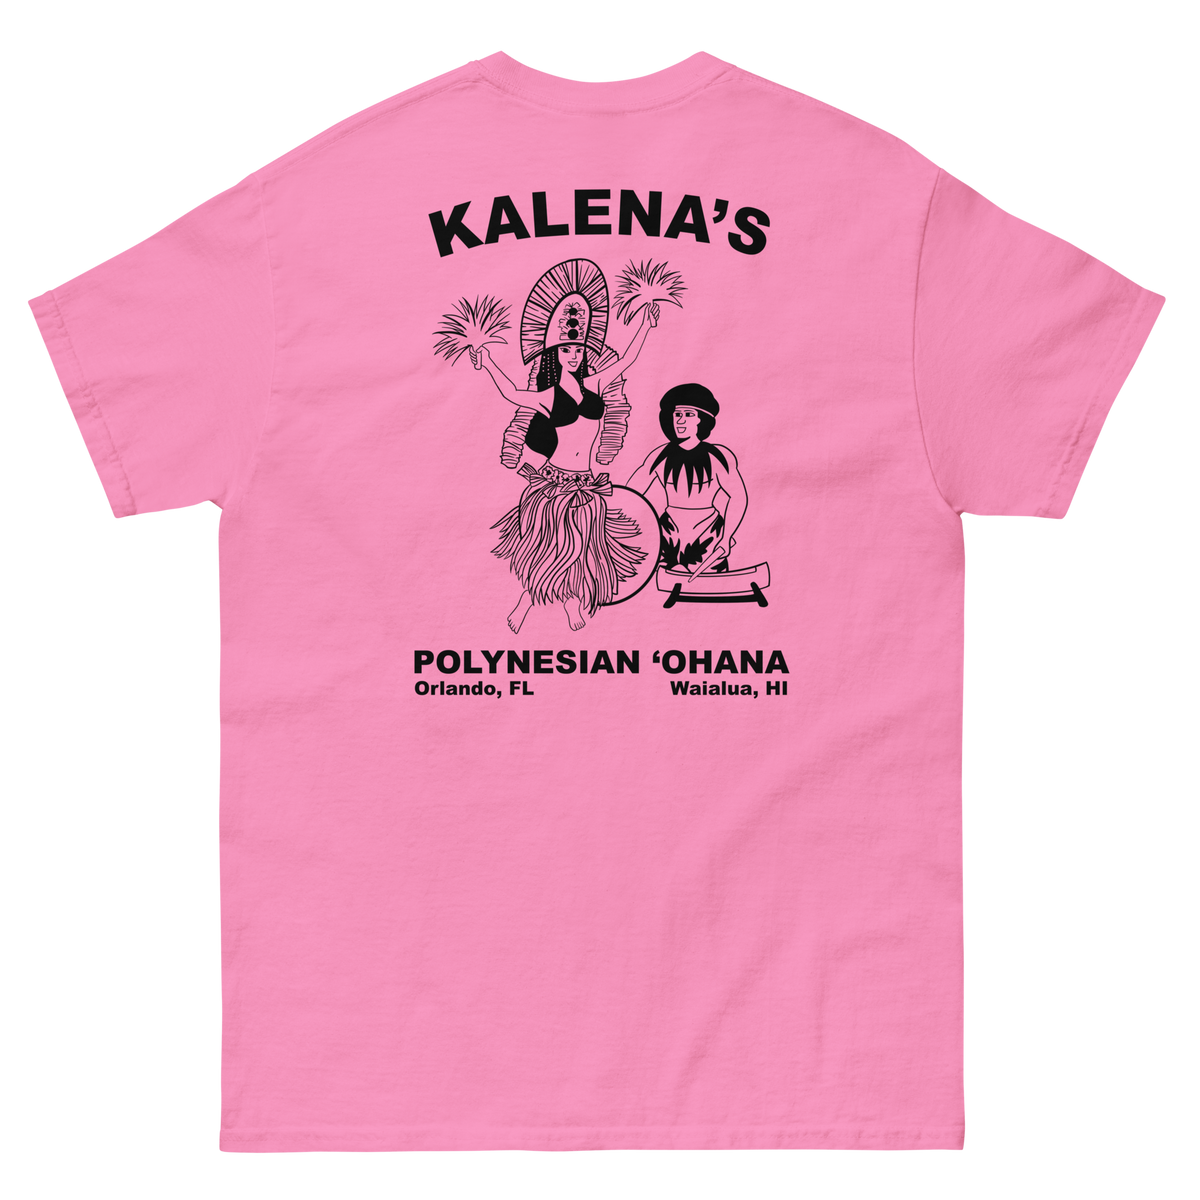 Kalena's Polynesian Ohana - Men's classic pink tee (Original Design)